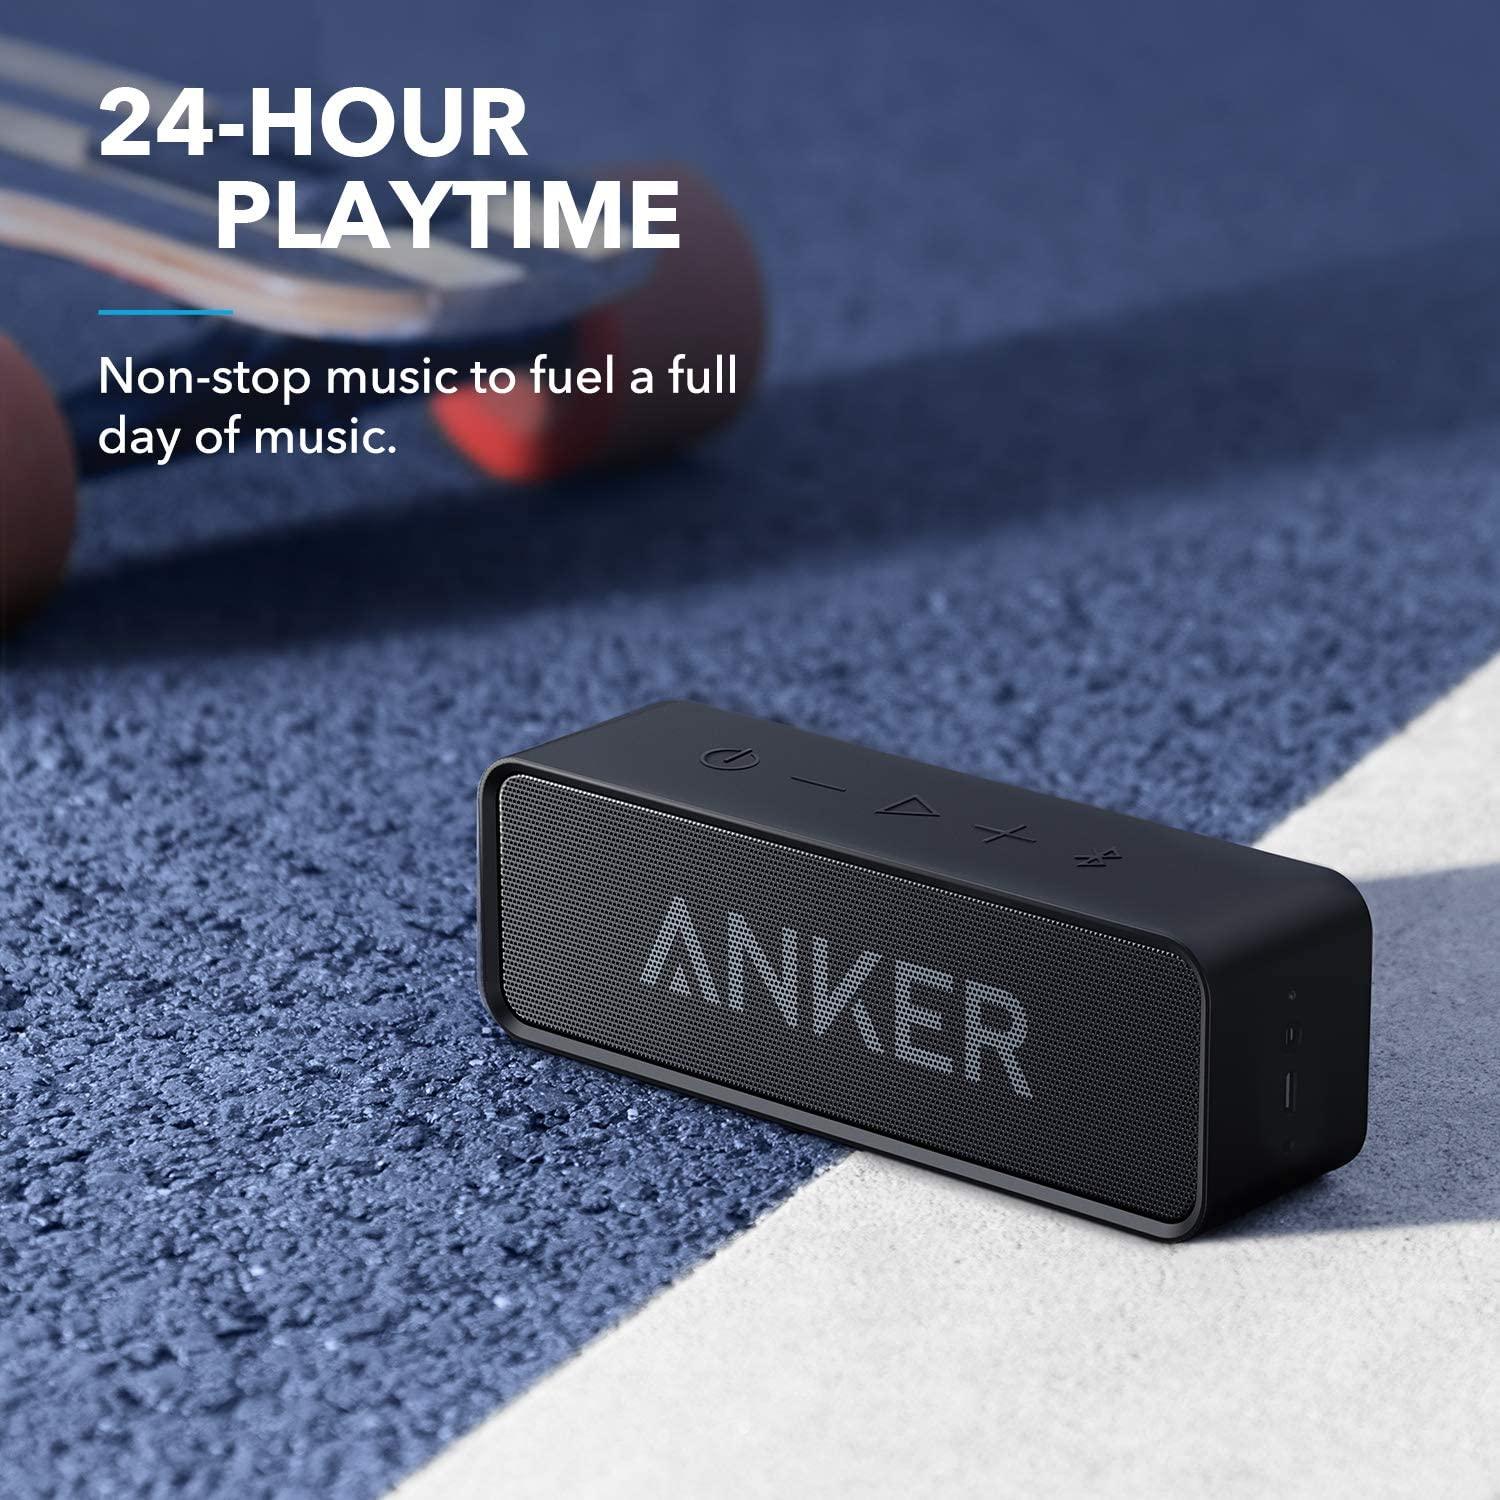 Anker Soundcore Bluetooth Speaker - GameStore.mt | Powered by Flutisat